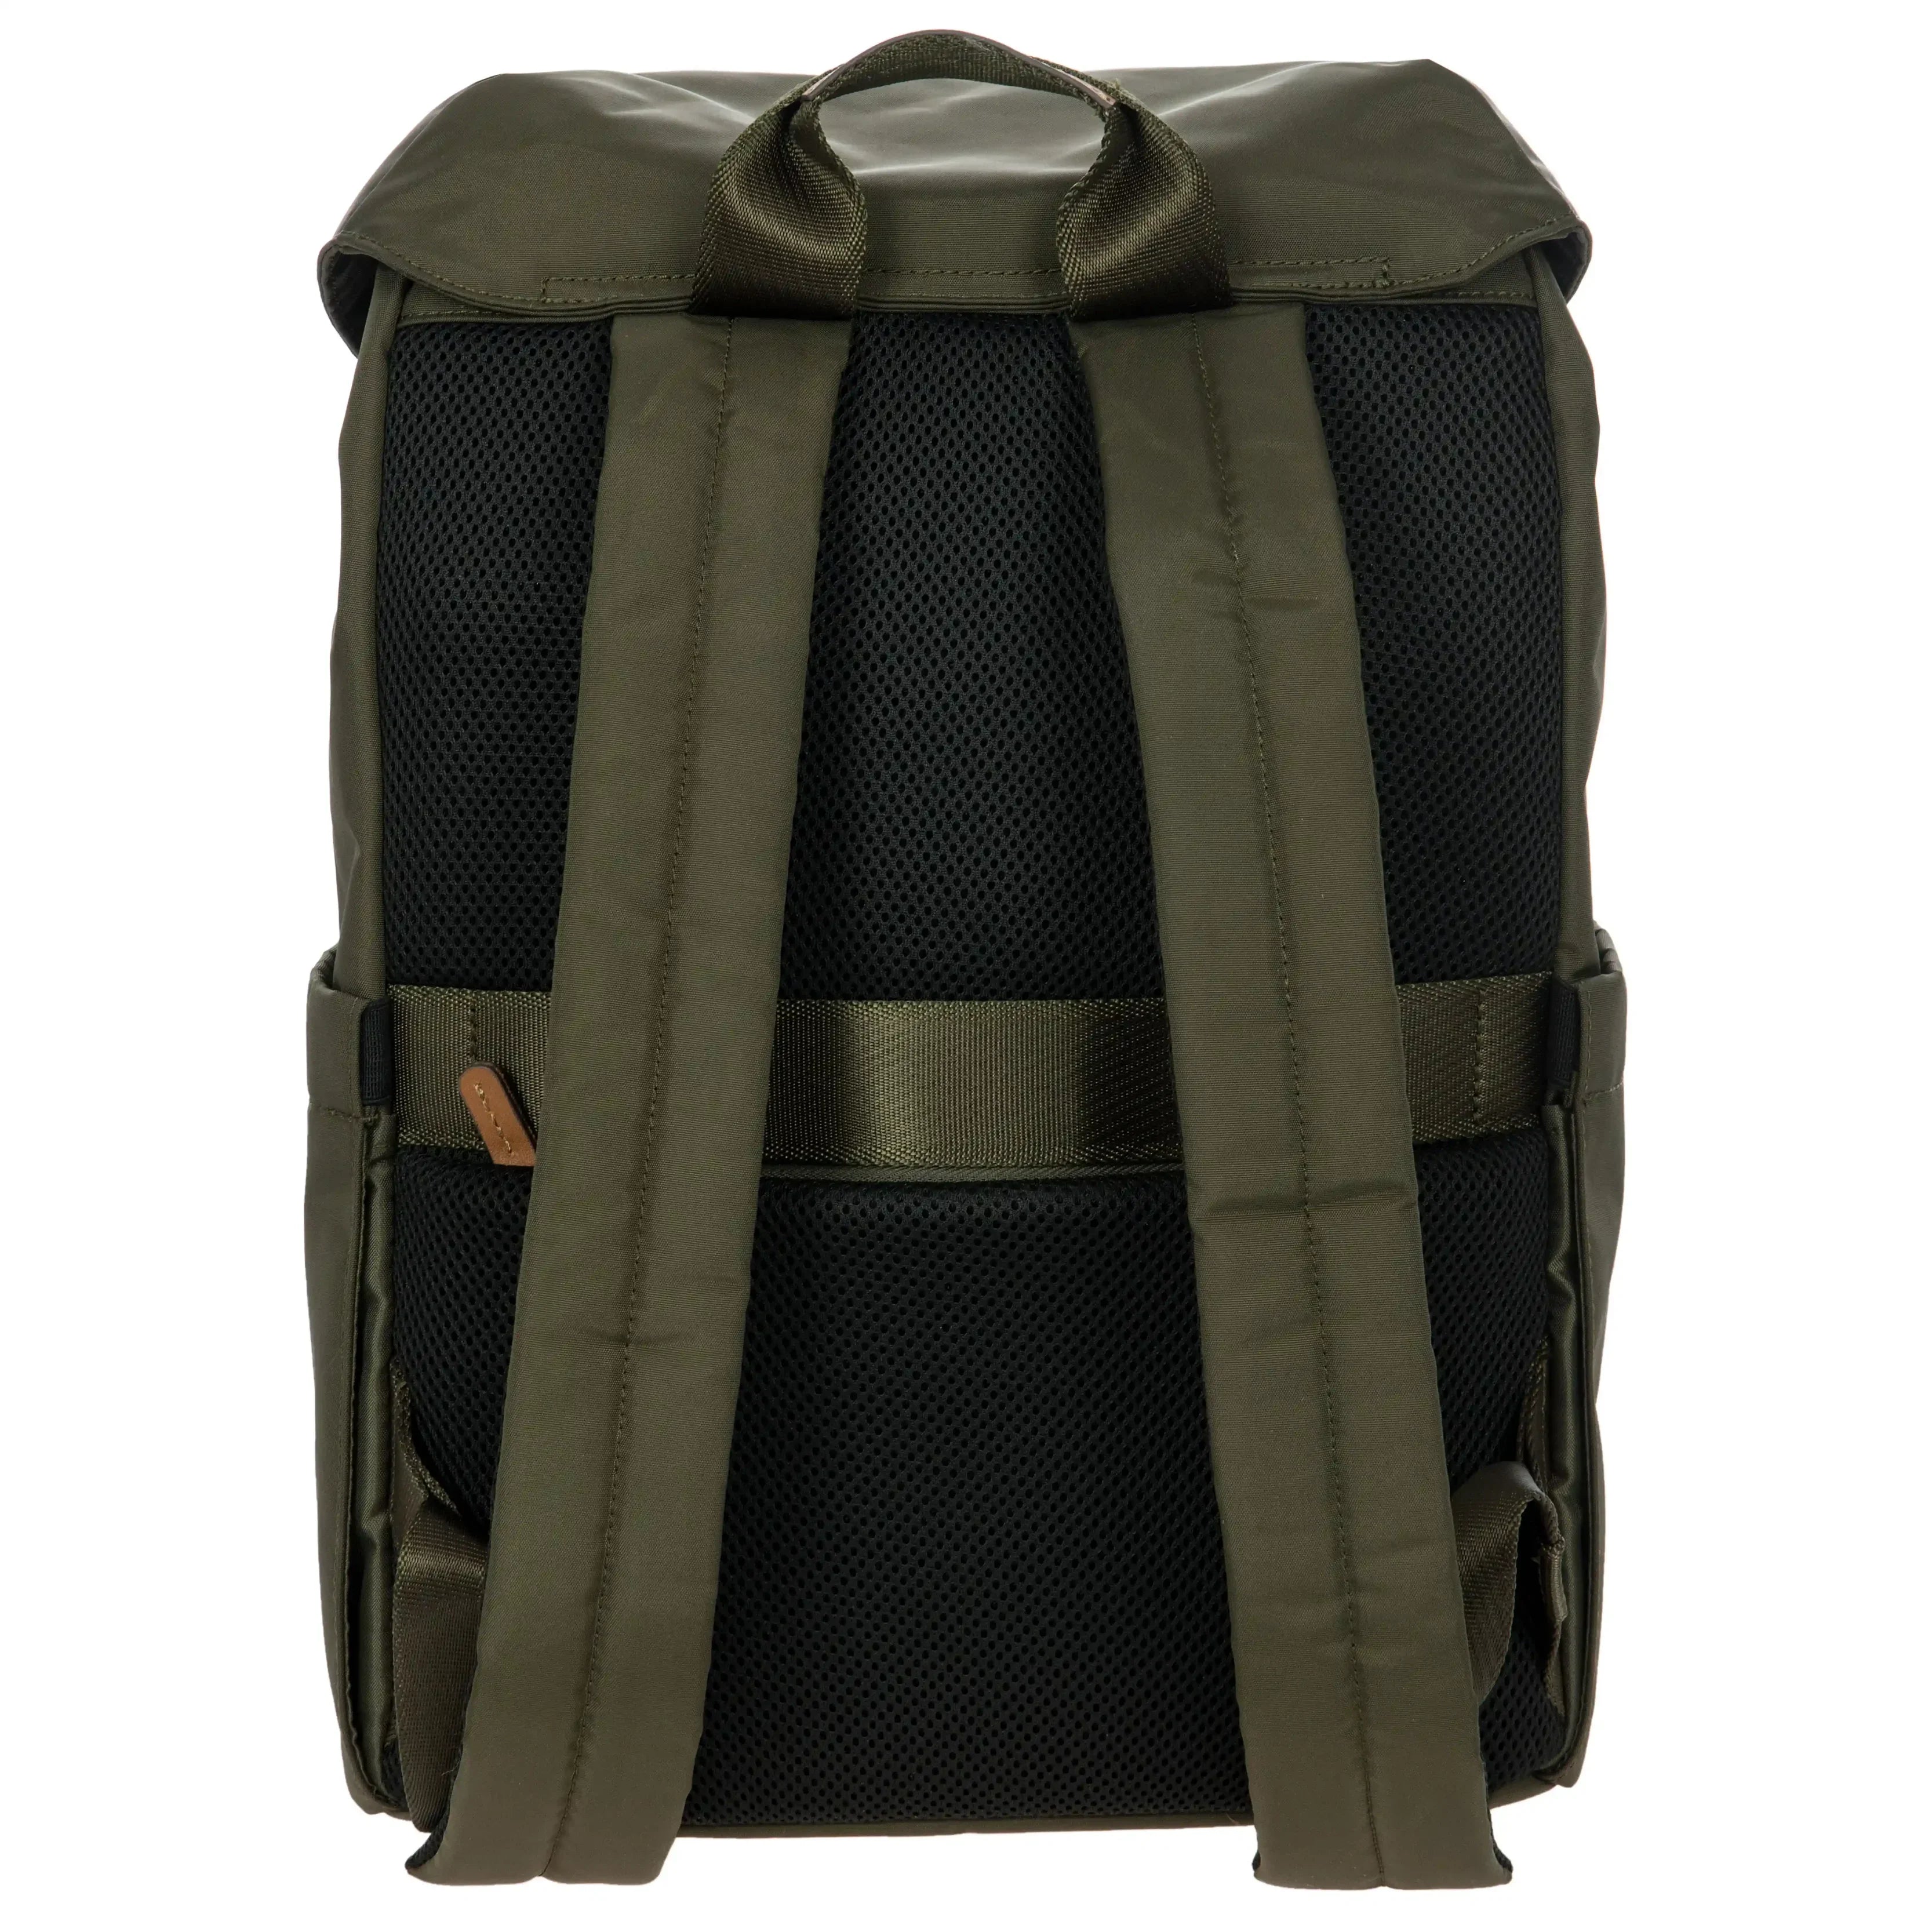 Brics X-Bag Backpack 40 cm - Black